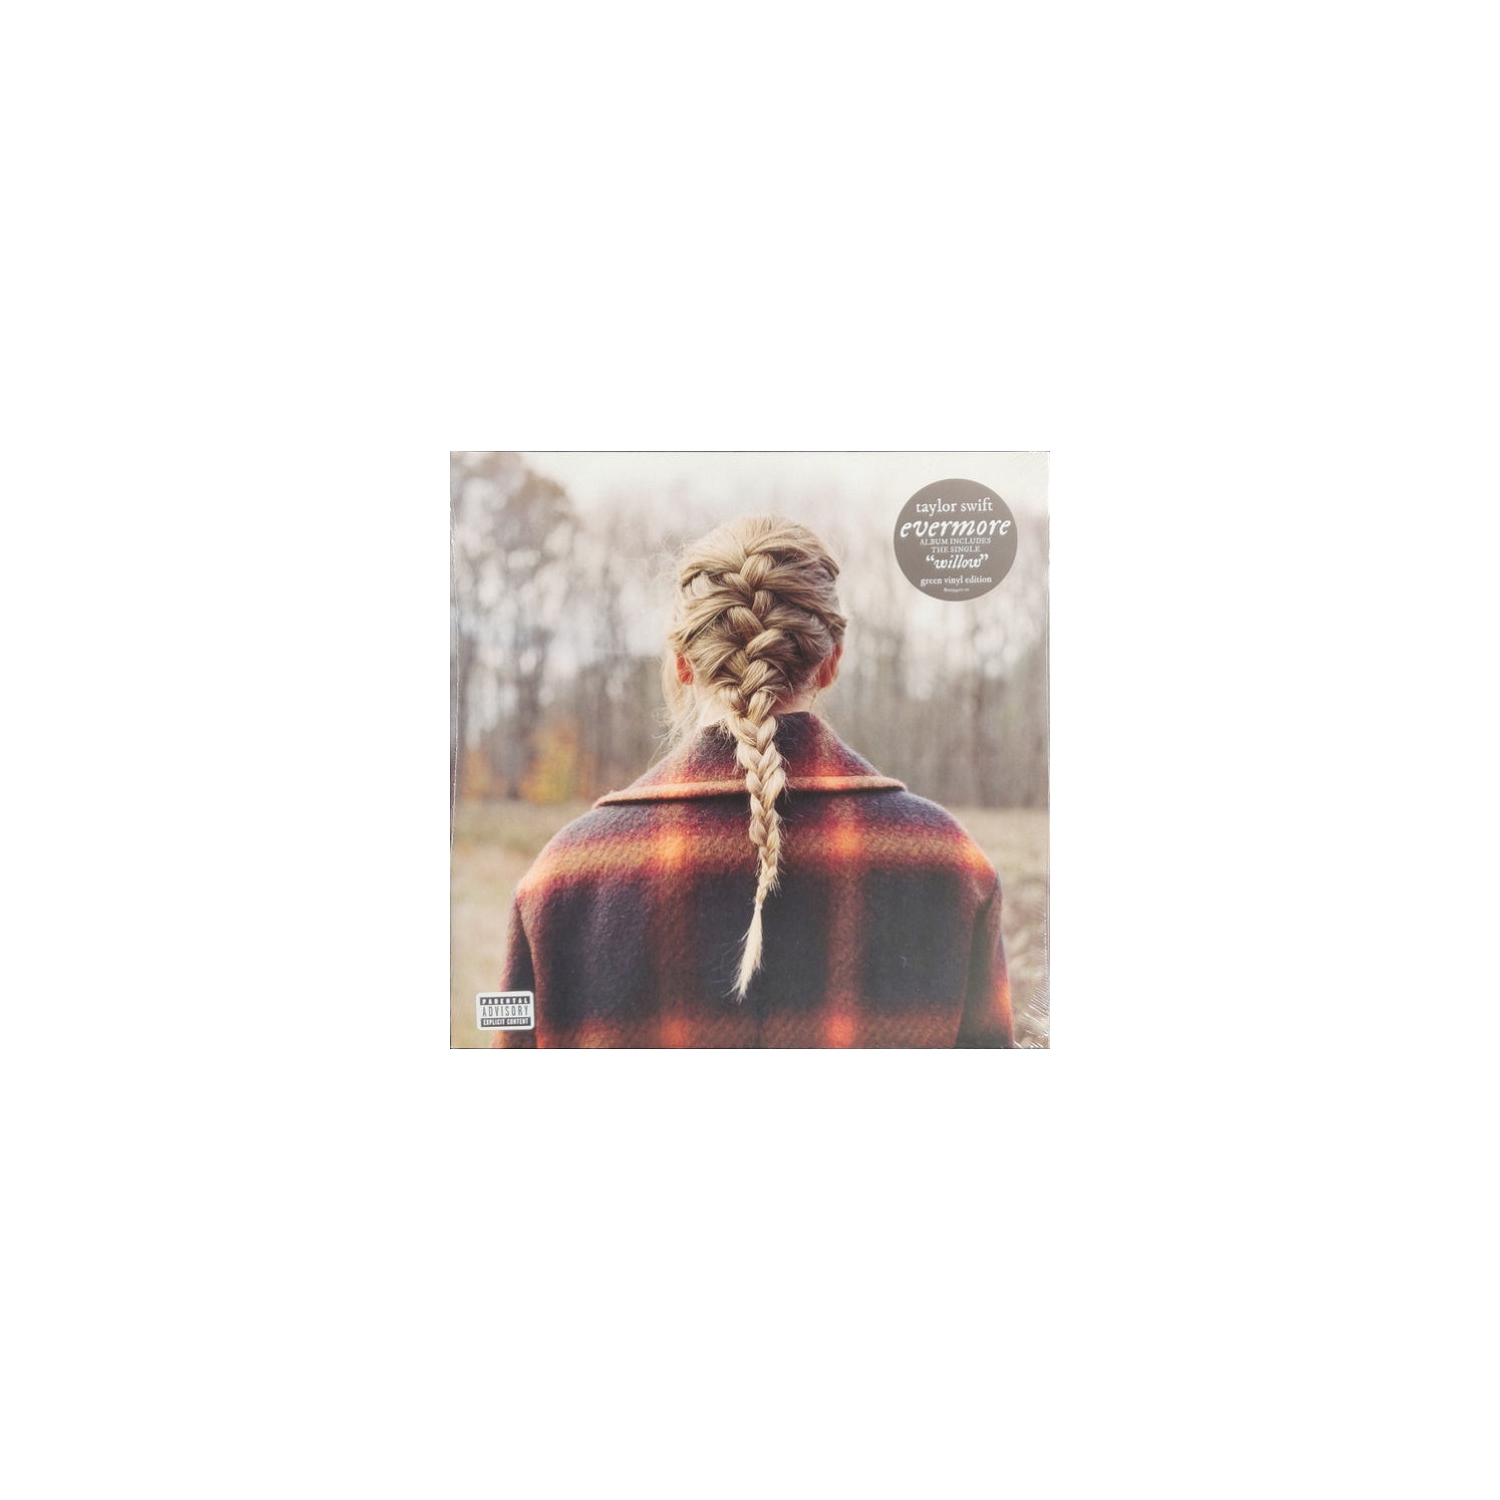 Taylor Swift - evermore - Limited Edition Green Vinyl [Audio Vinyl]